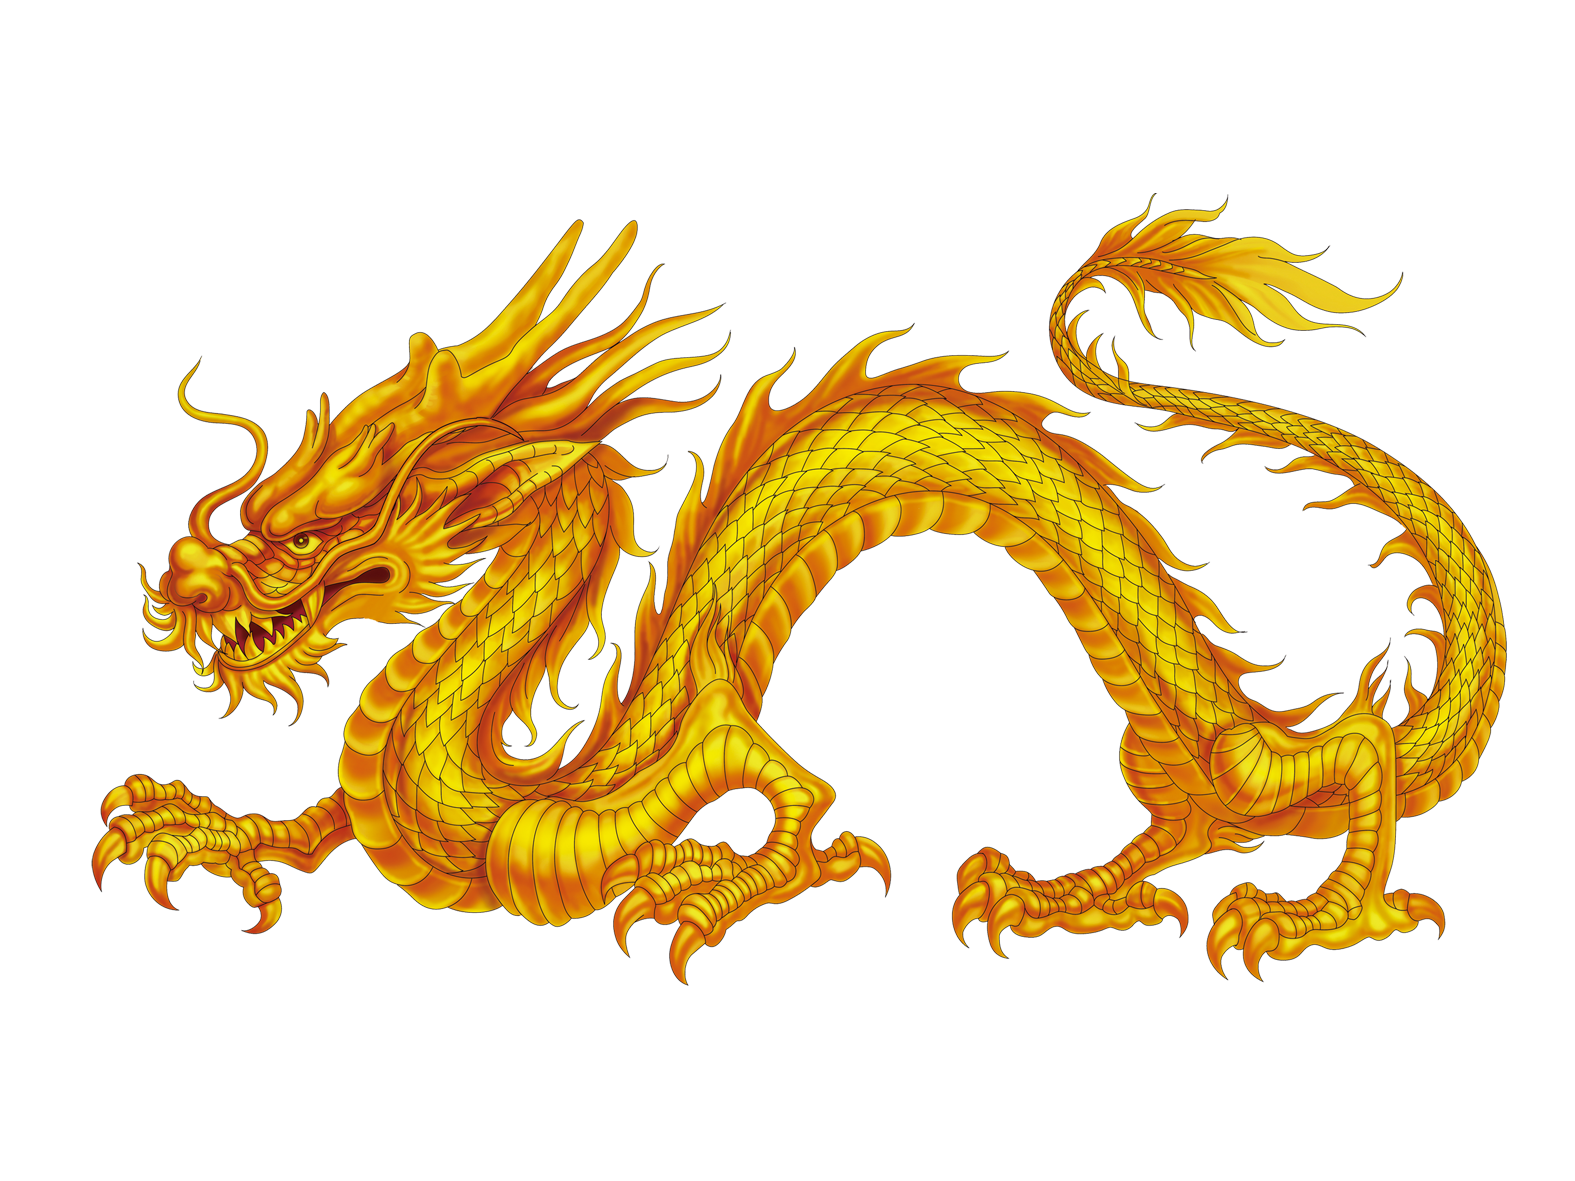 clipart dragon dragon japanese